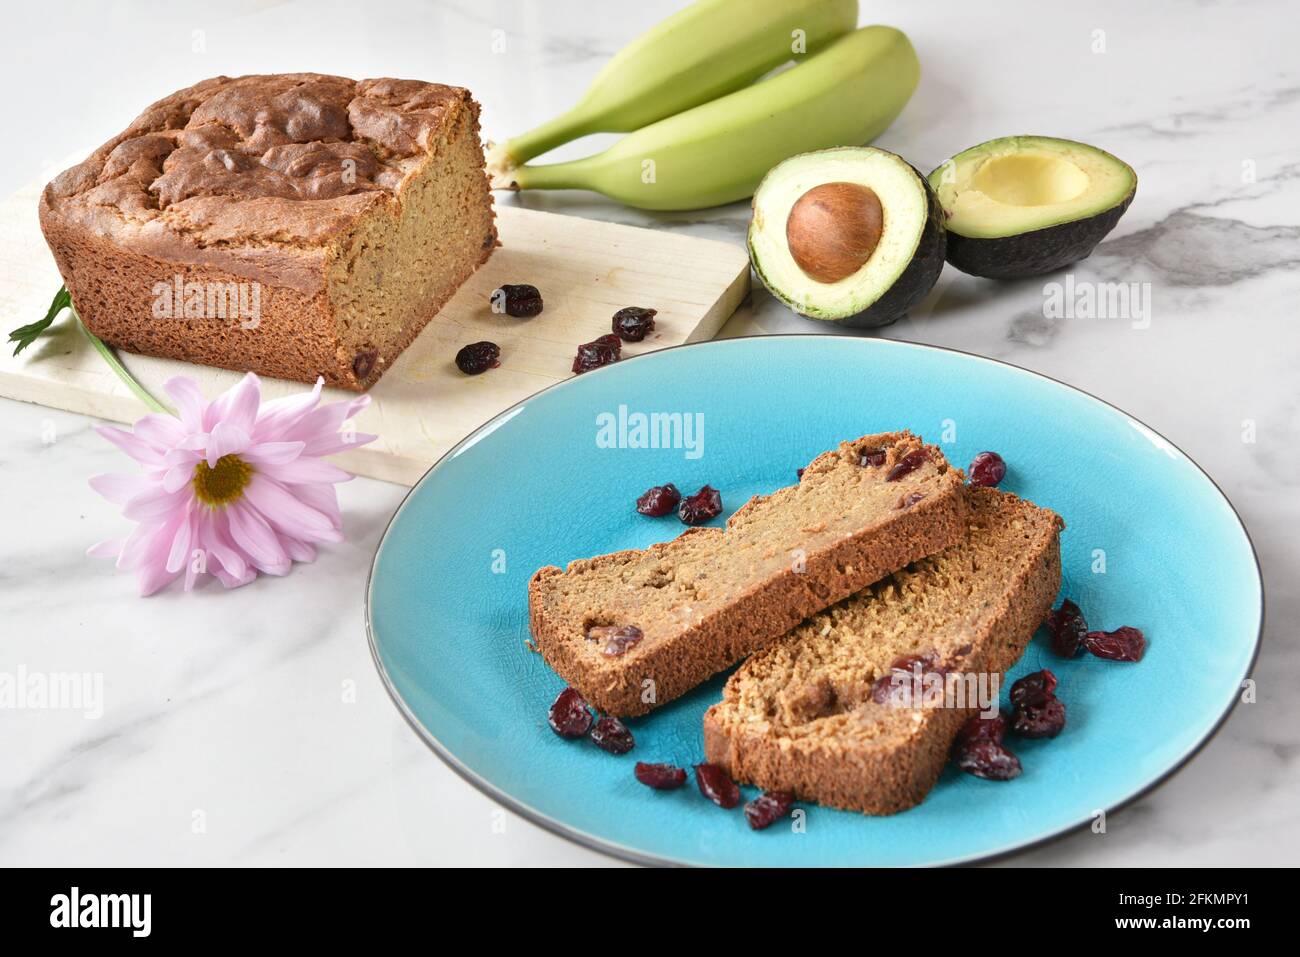 Food Photography Stock Photo